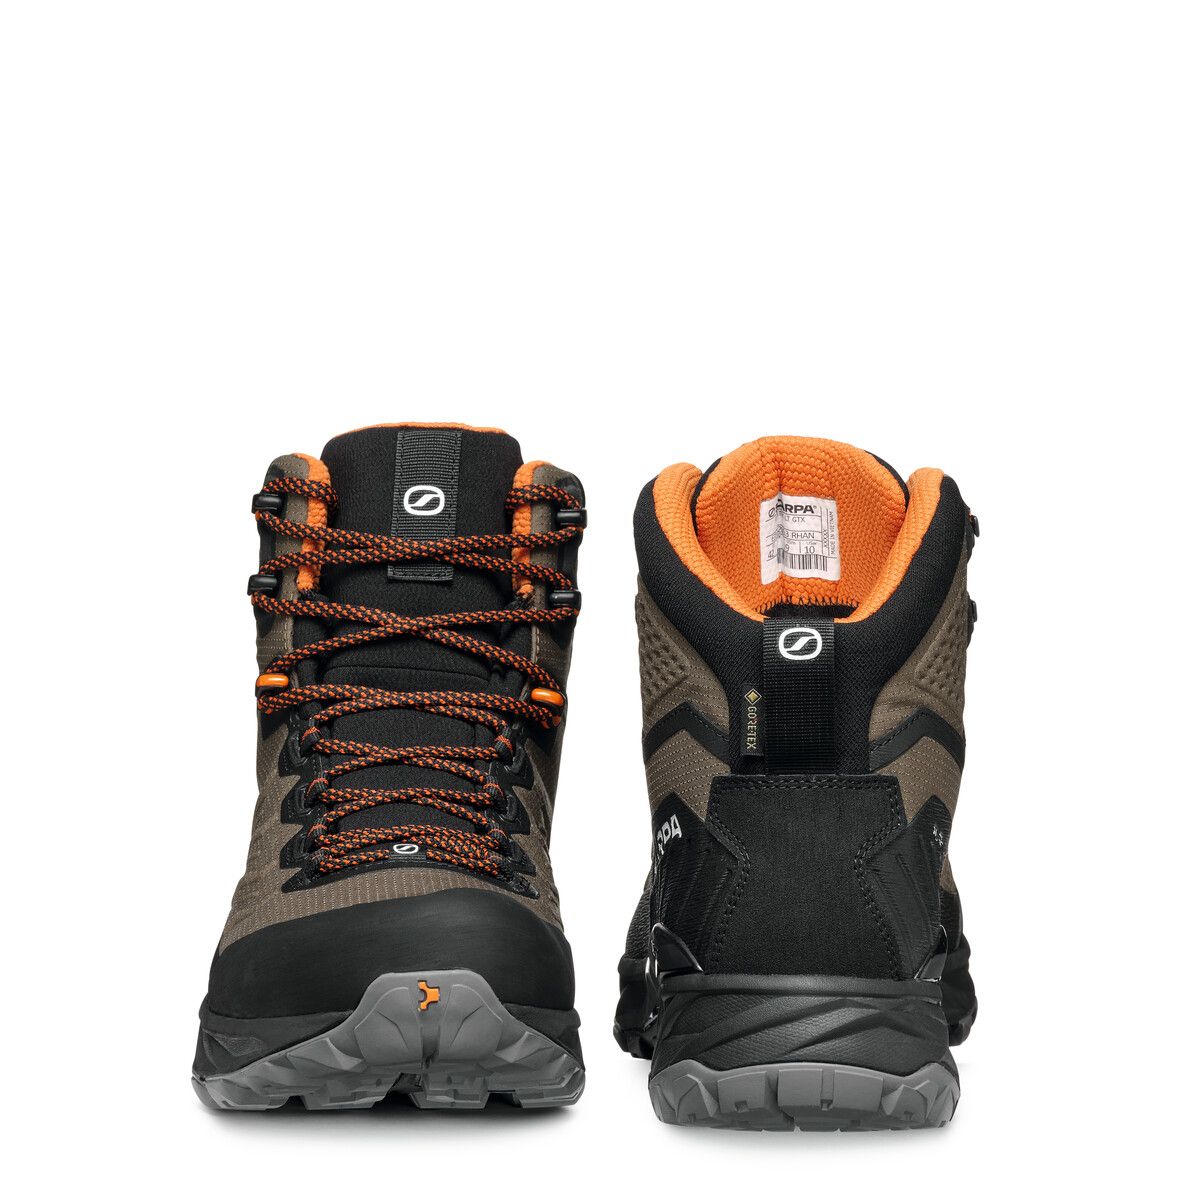 Men's Rush Trek LT GTX Hiking Boots